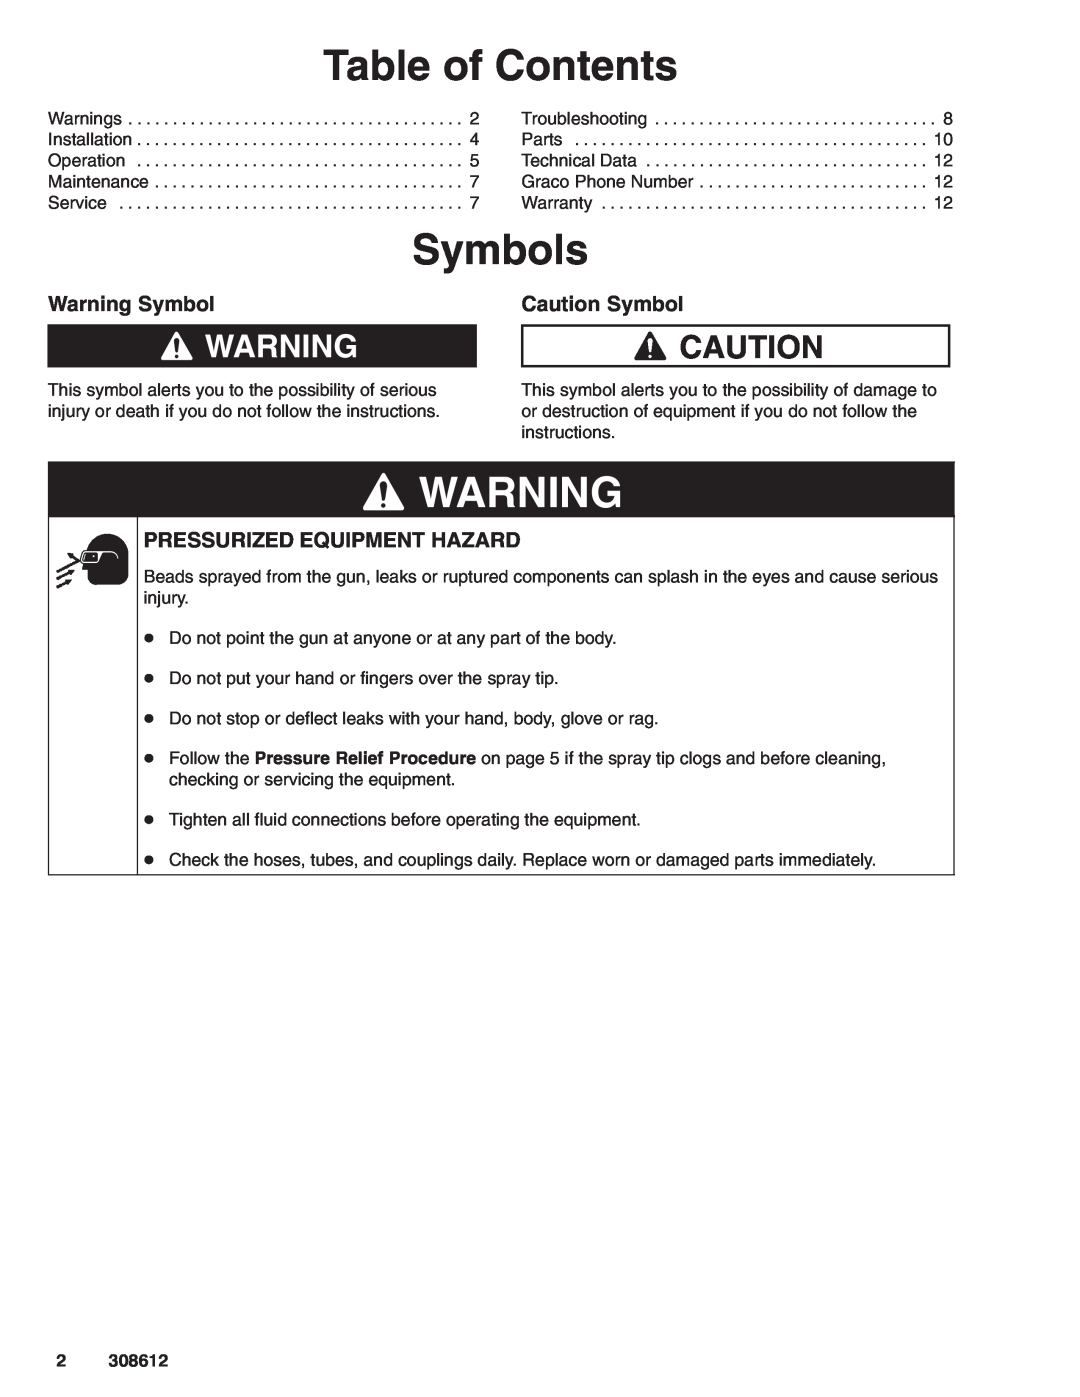 Graco Inc 308612, 238338 manual Table of Contents, Symbols, Warning Symbol, Caution Symbol, Pressurized Equipment Hazard 